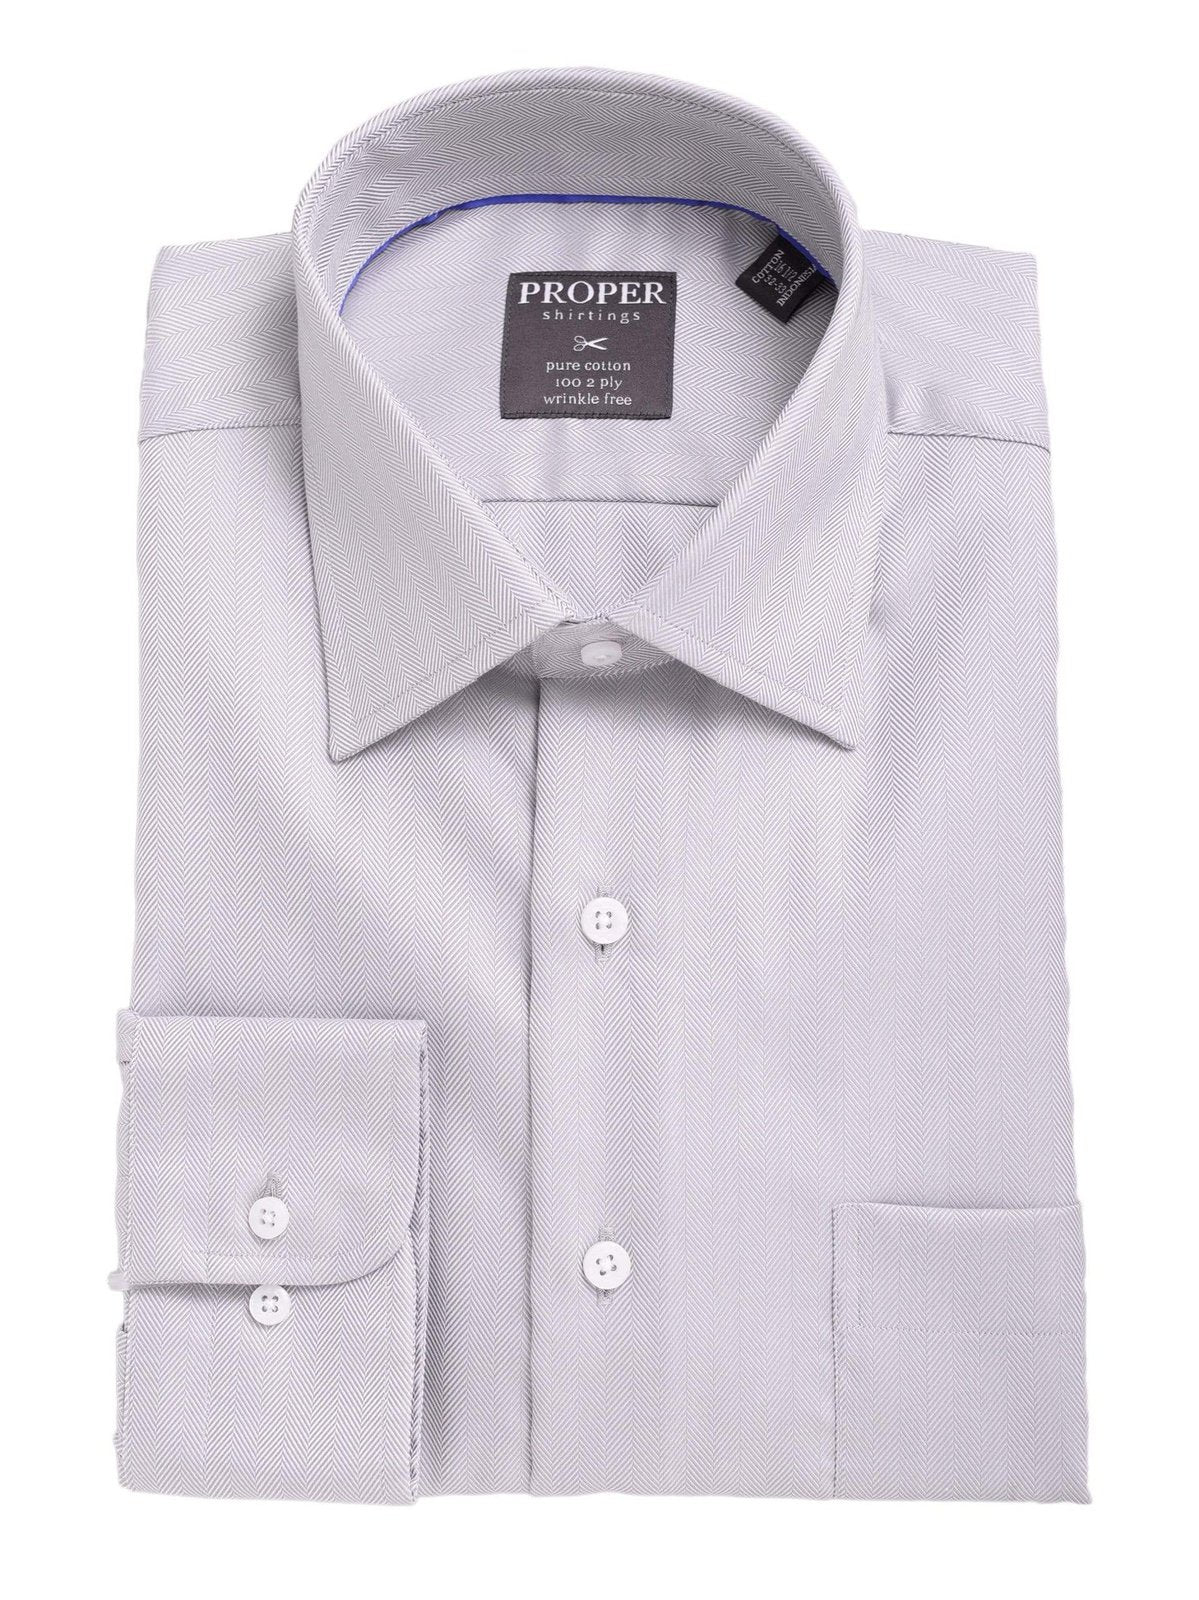 Proper Shirtings SHIRTS 16 1/2 32/33 Mens Classic Fit Gray Herringbone Spread Collar 100 2 Ply Cotton Dress Shirt